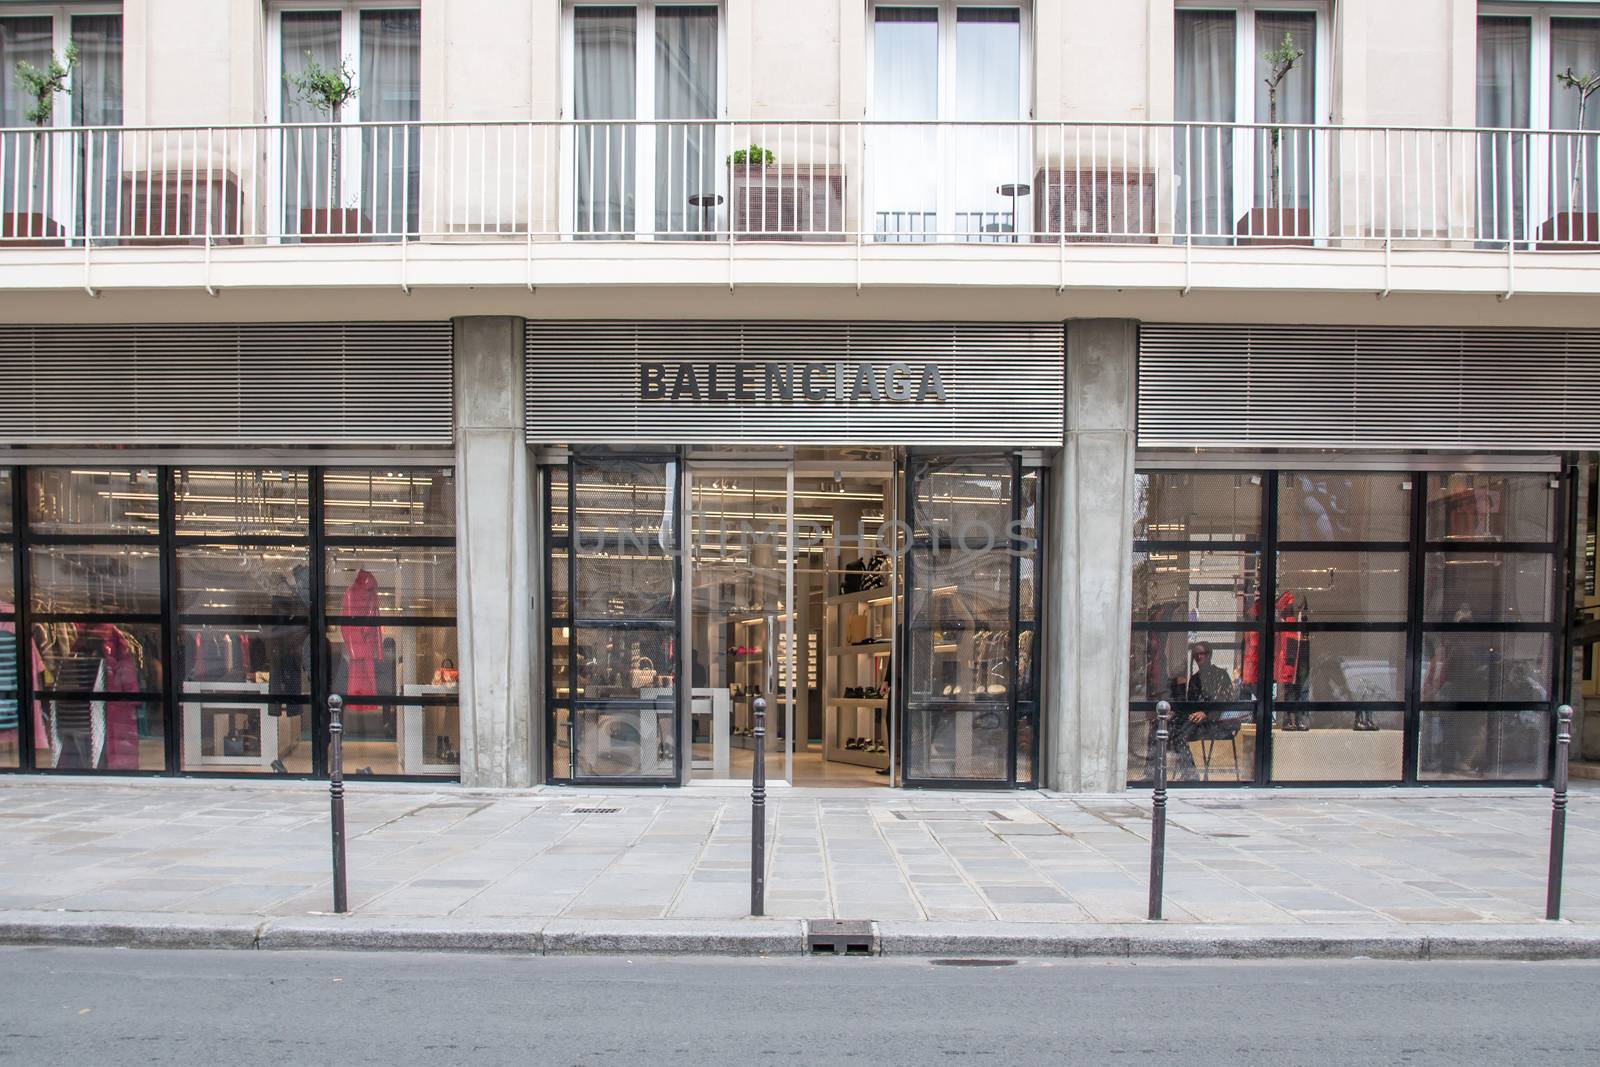 Balenciaga Store Facade on " Rue saint Honoré " in Paris, France, Luxury clothing brand shop by ontheroadagain